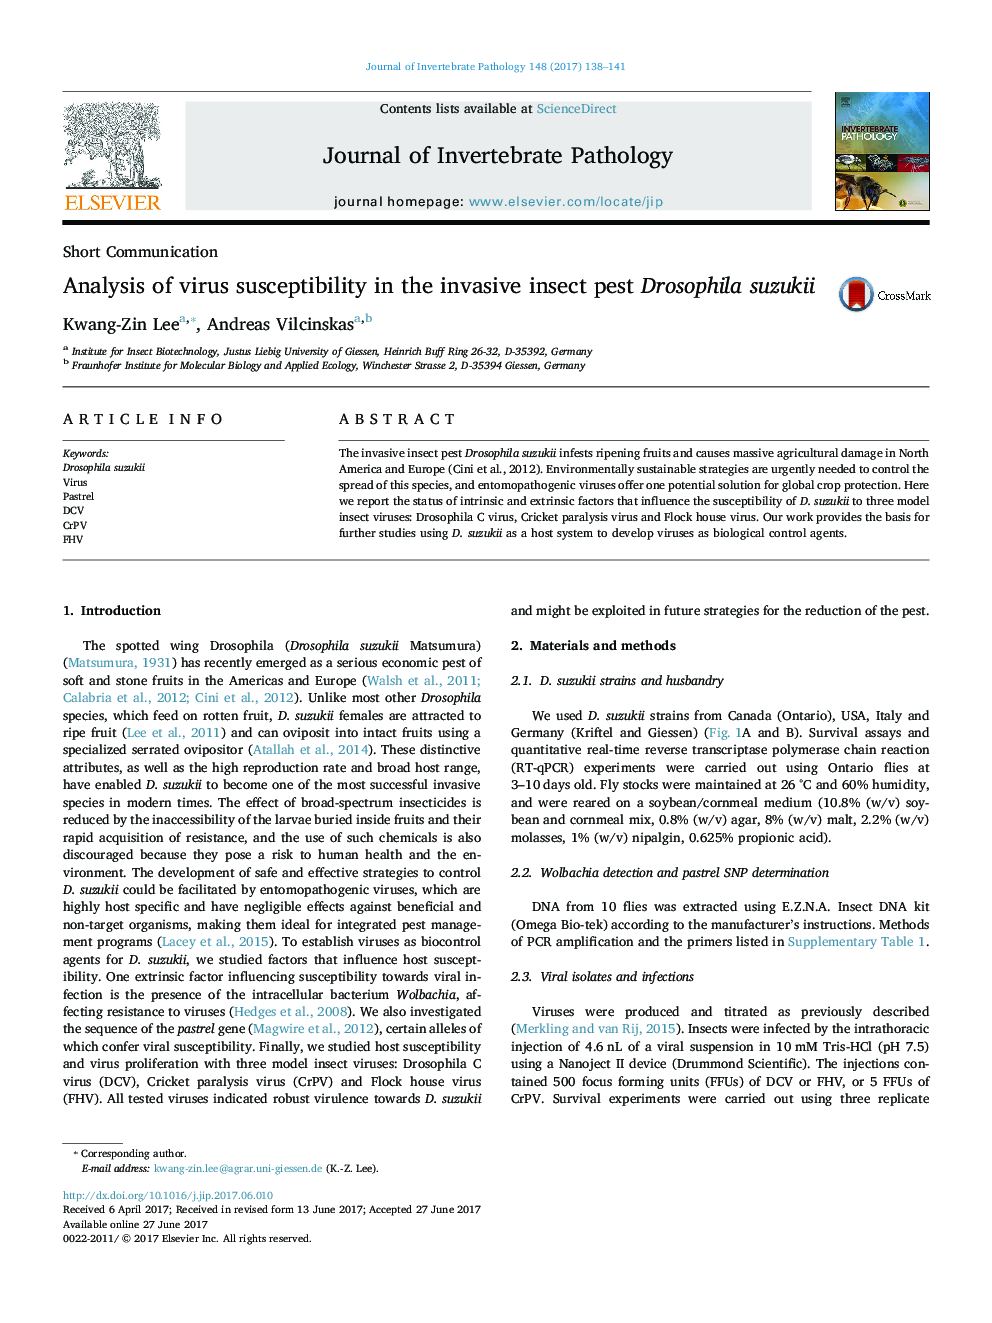 Short CommunicationAnalysis of virus susceptibility in the invasive insect pest Drosophila suzukii